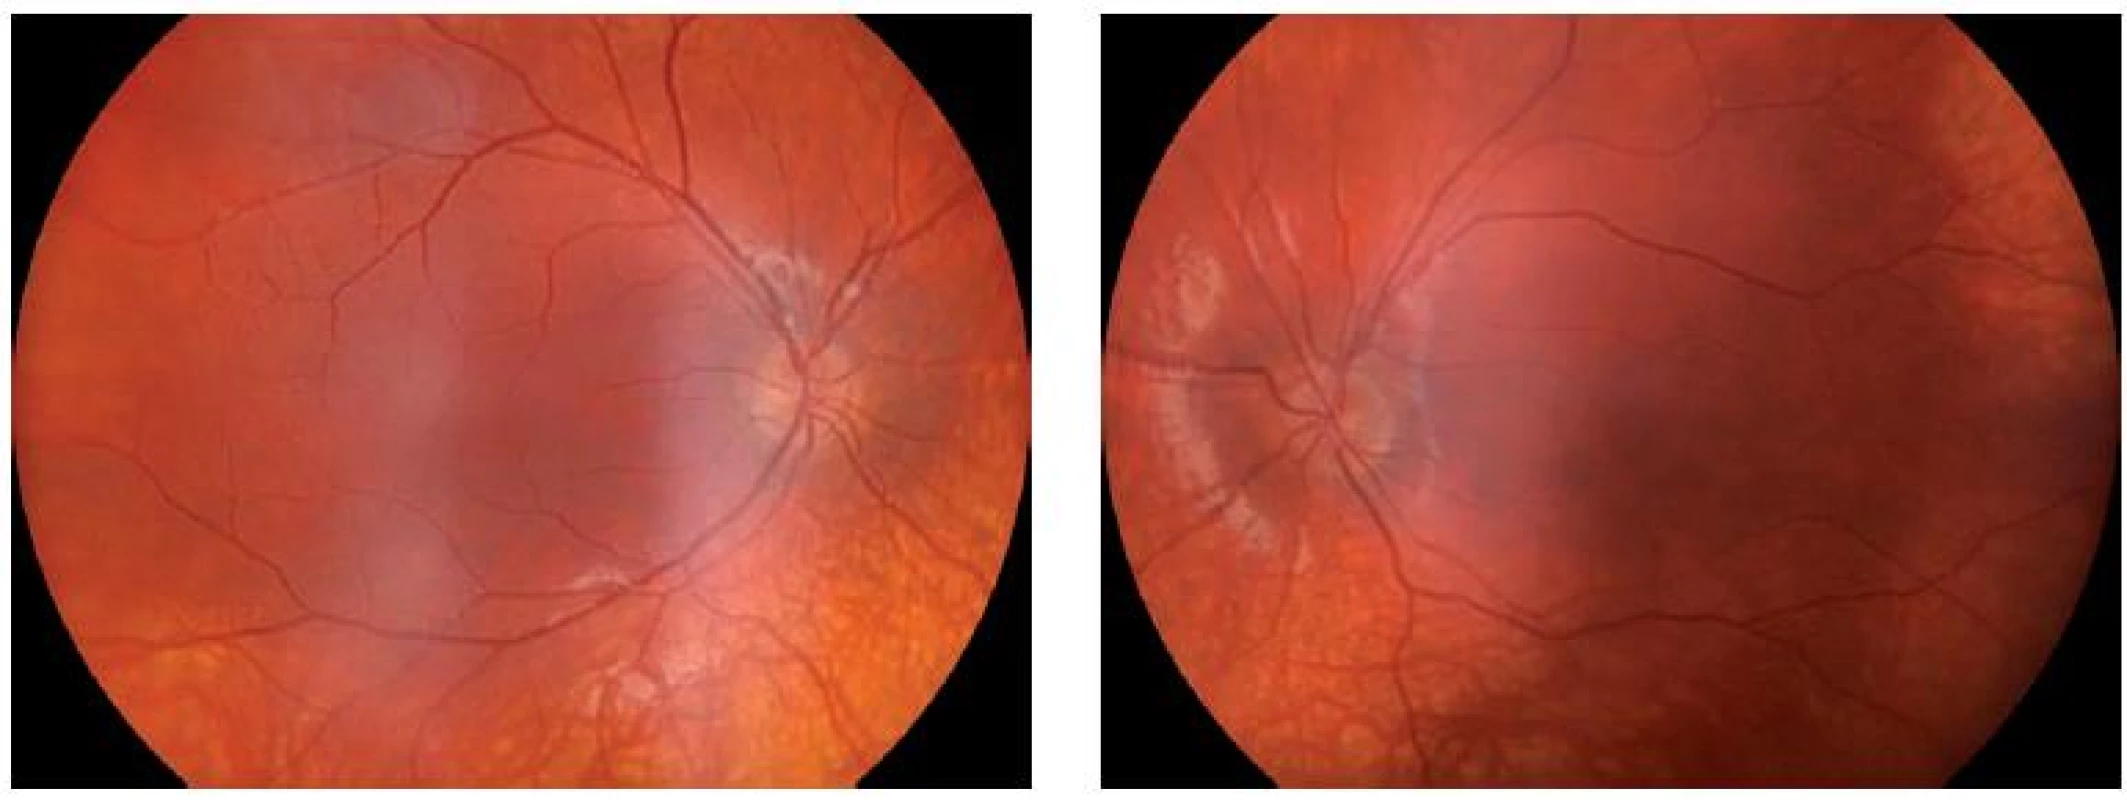 Oční pozadí u pacienta III-1: pravé (A) a levé oko (B); je patrné prořídnutí RPE (retinální pigmentový epitel) v periferii.